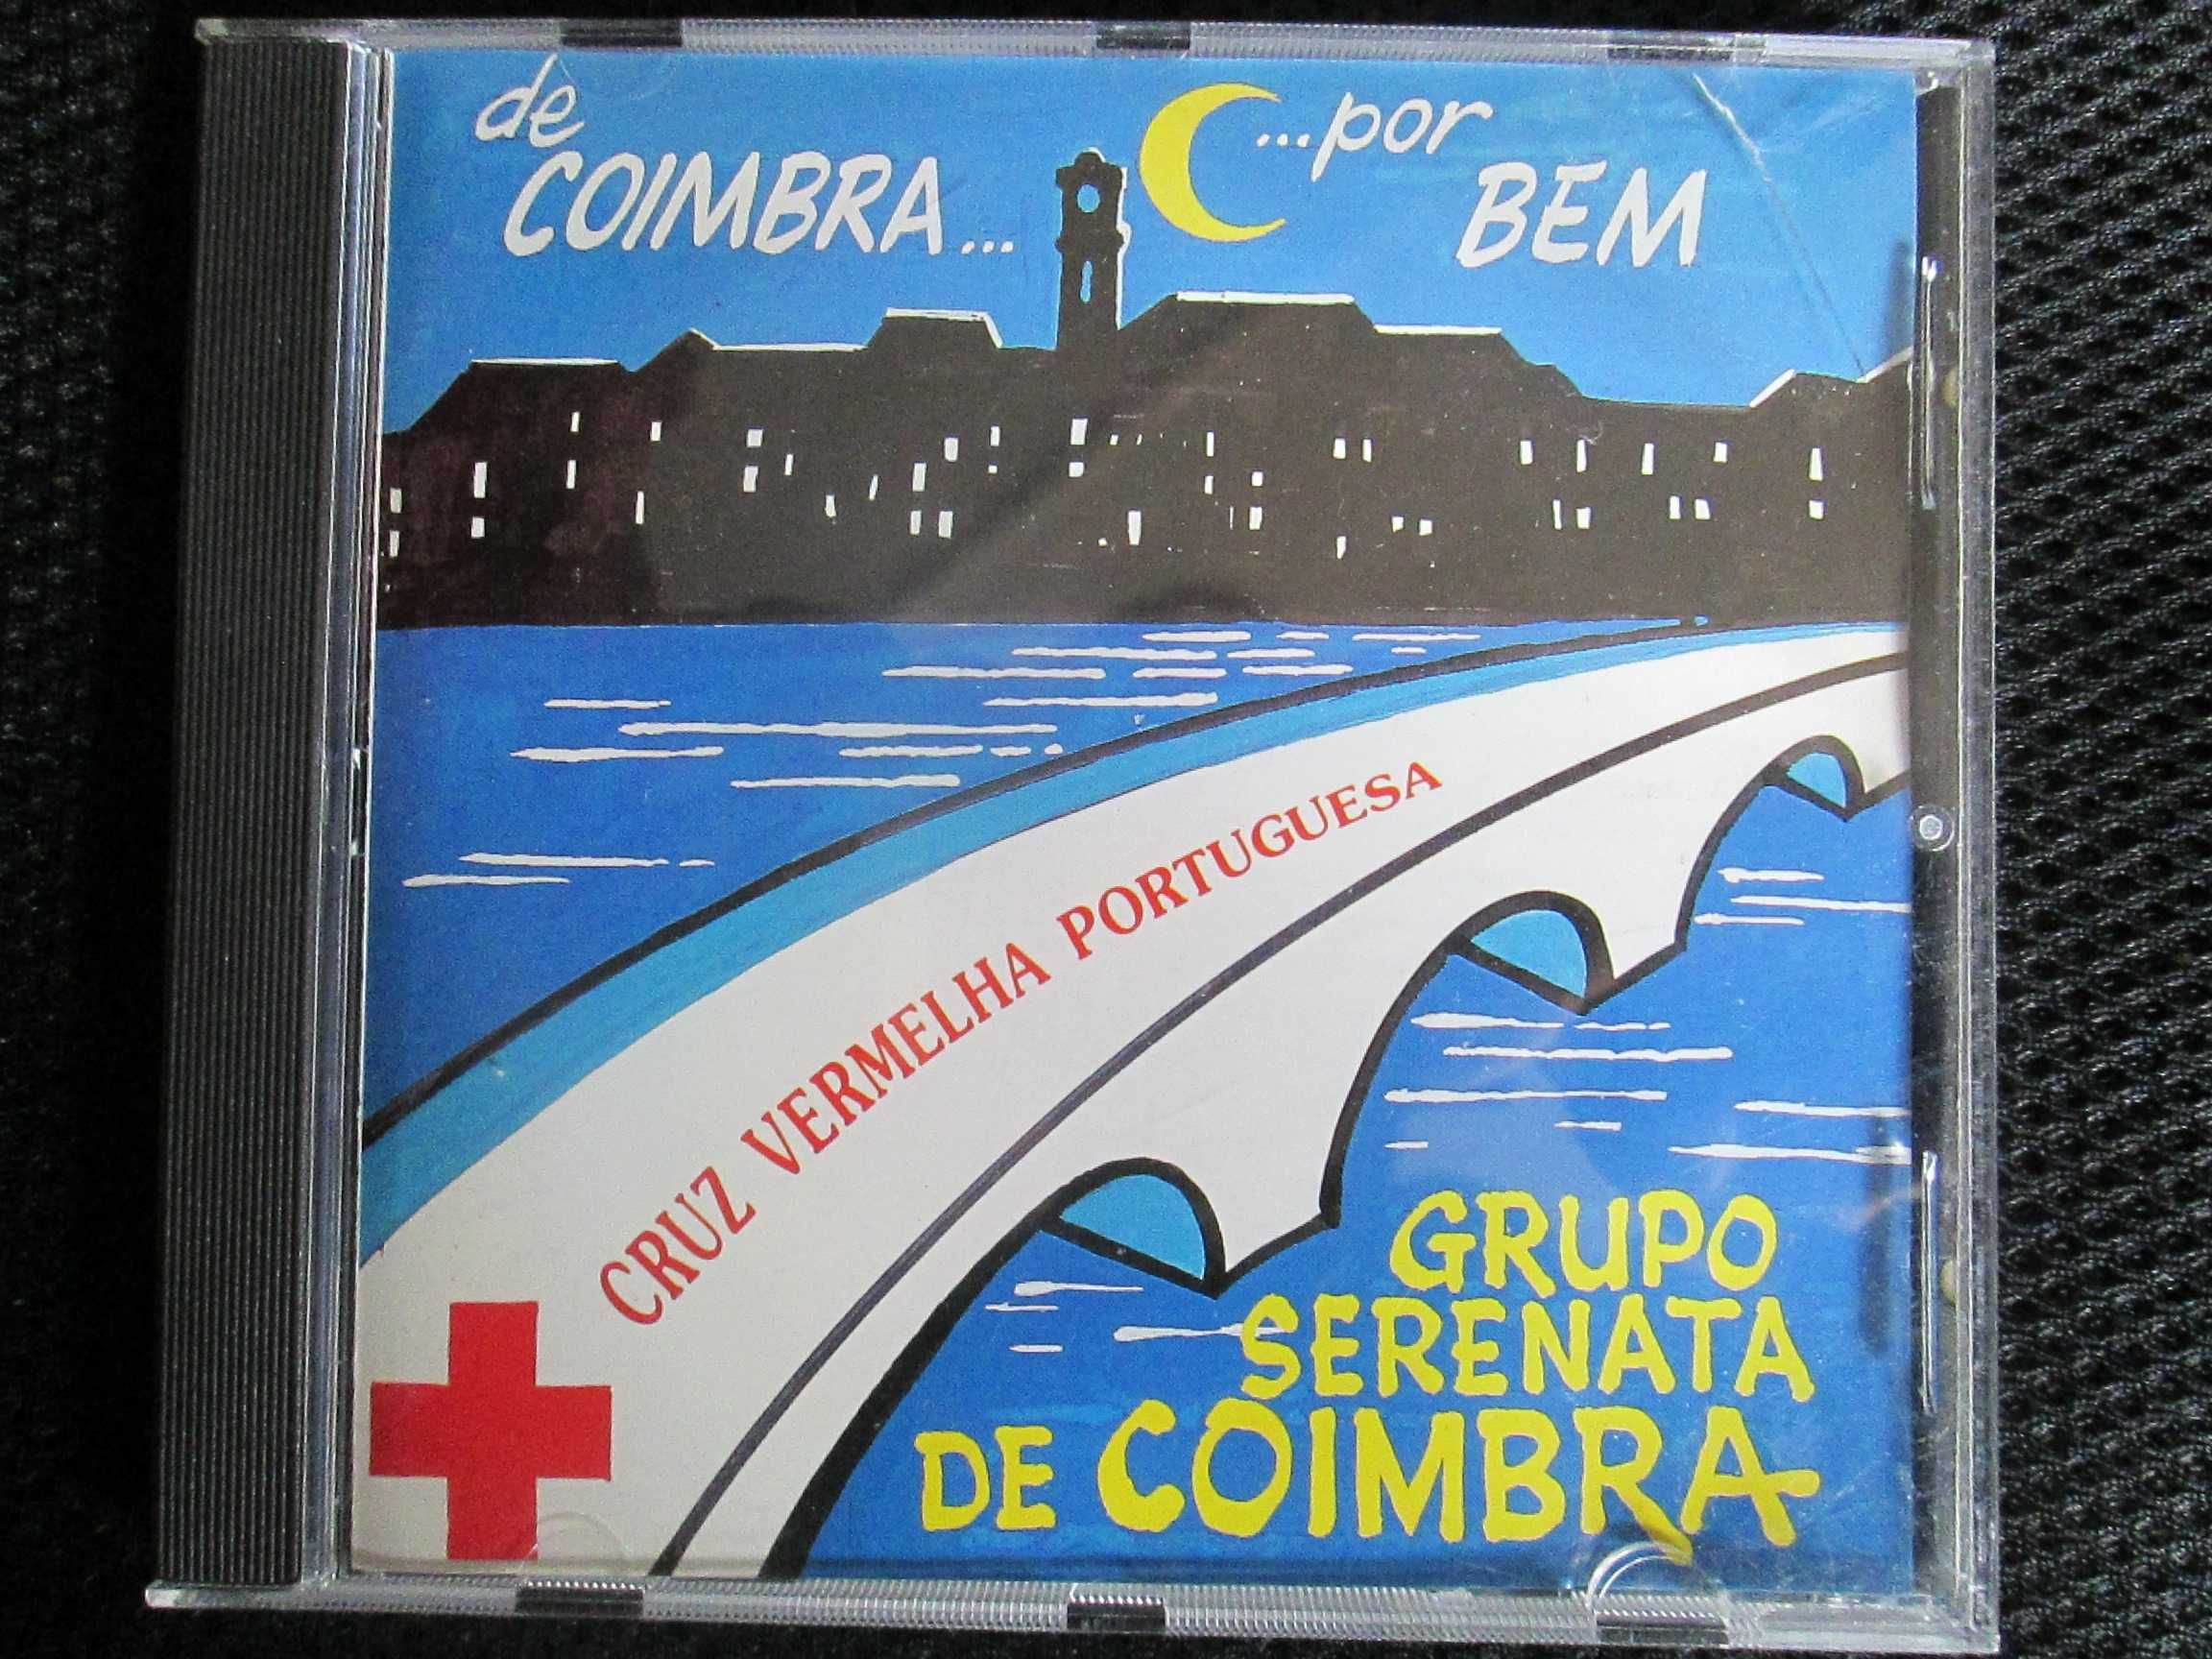 Grupo Serenata de Coimbra - Por bem...de Coimbra